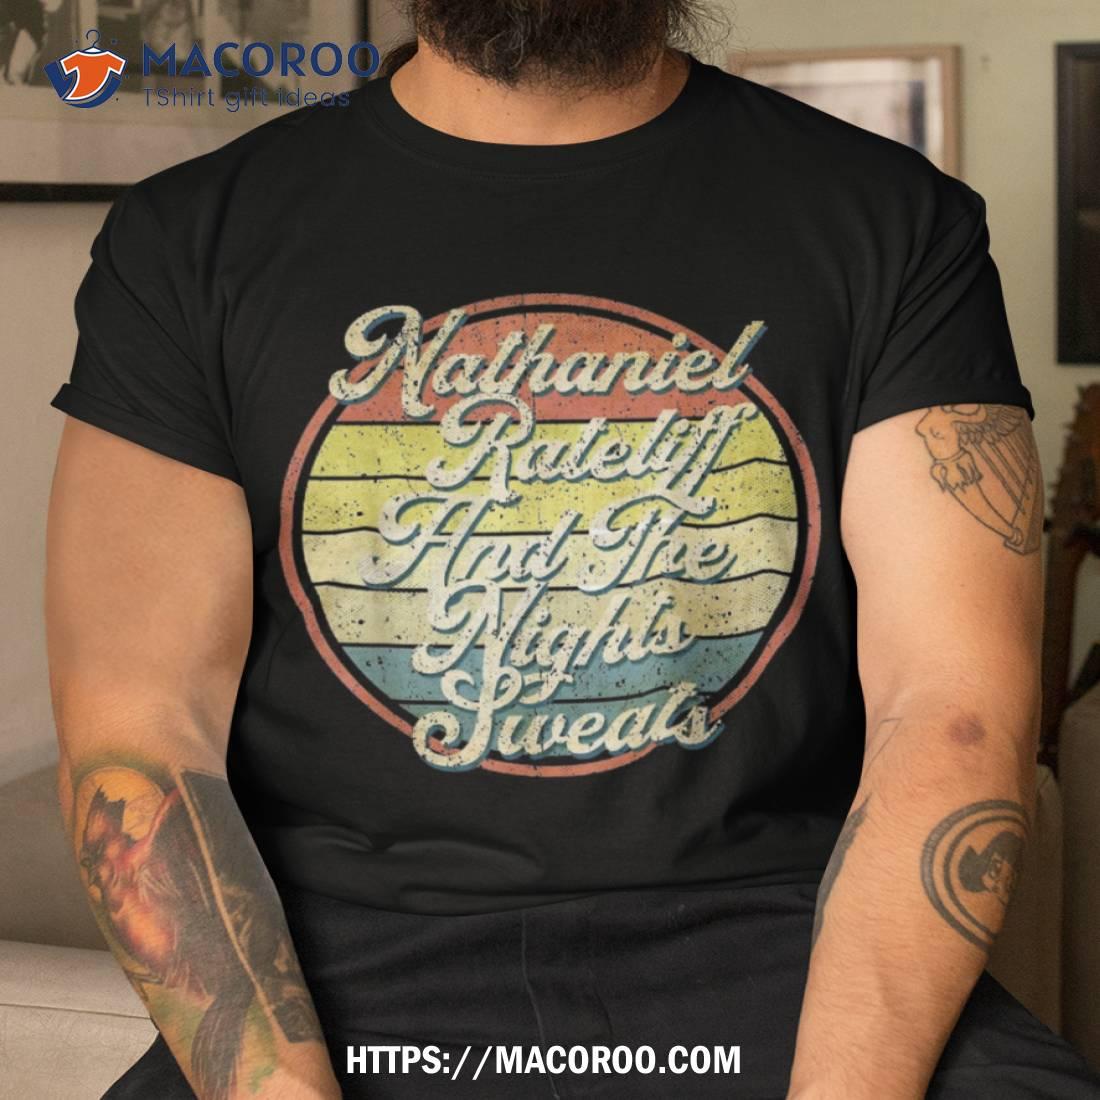 Macoroo Shirt on LinkedIn: Vintage American Papa Football Shirt